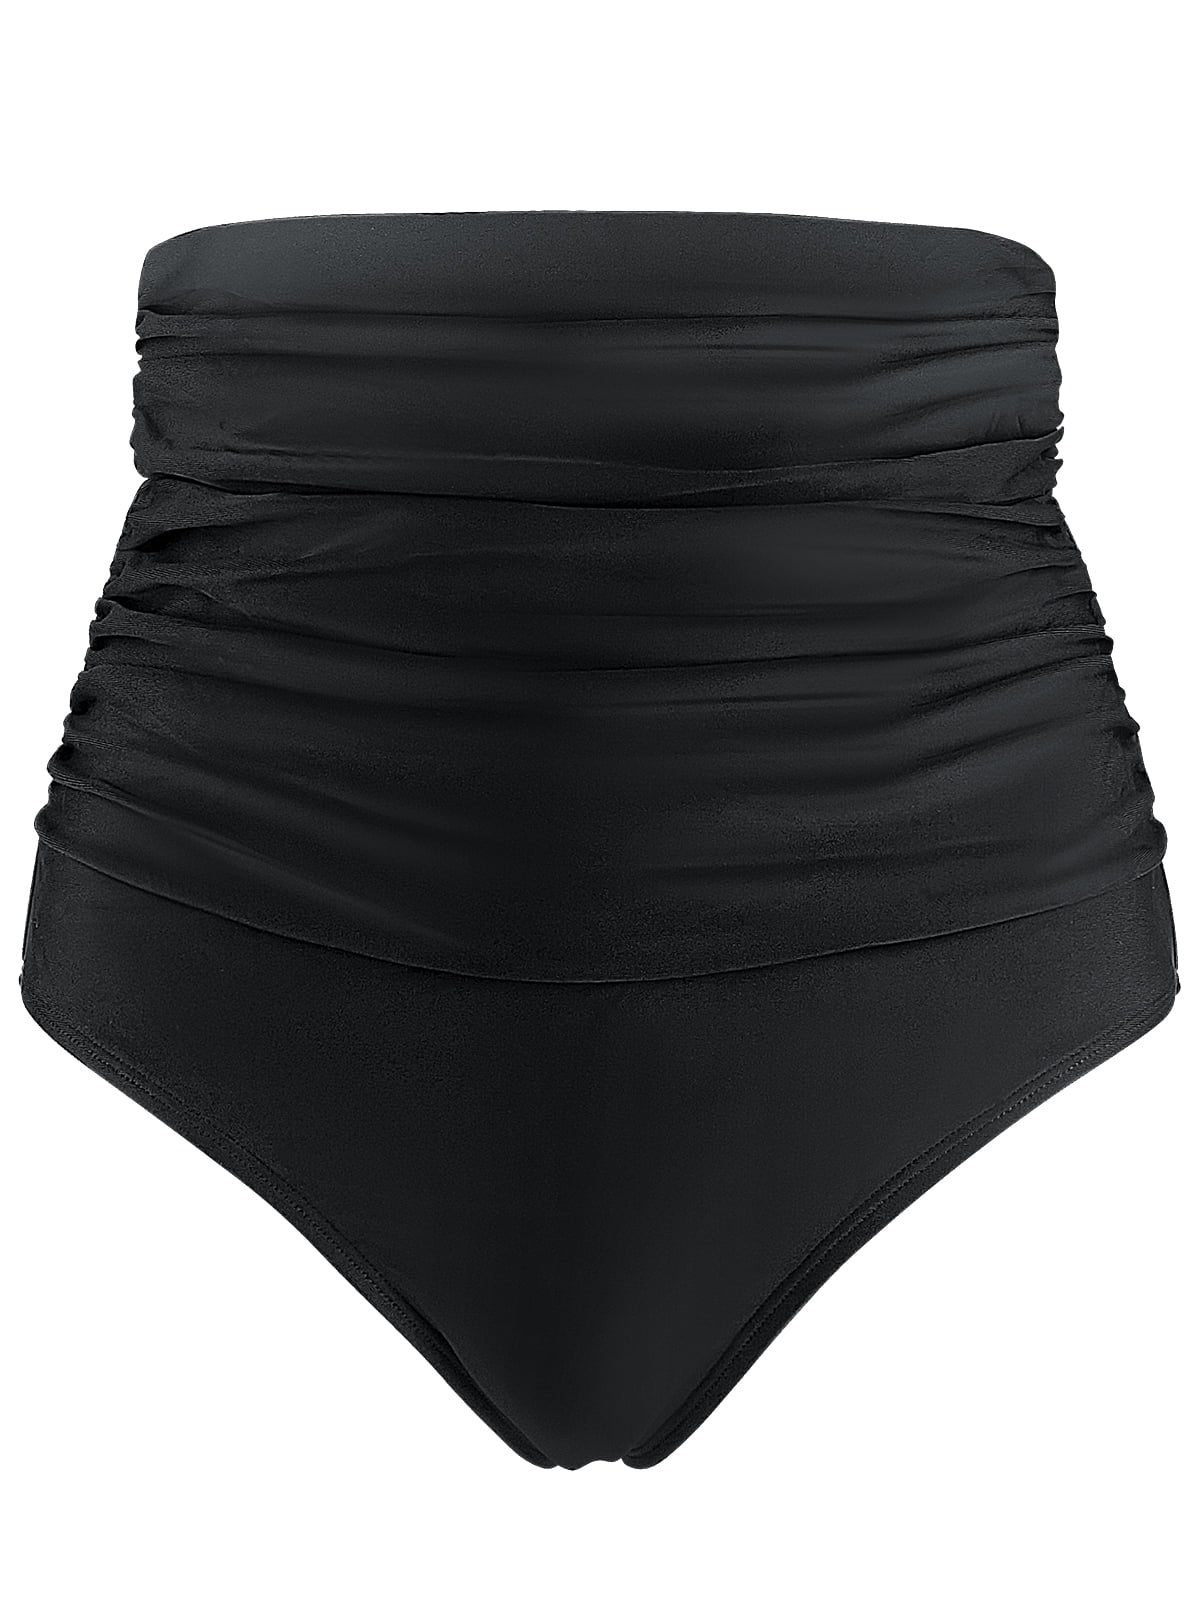 RELLECIGA Women's Super High Waisted Bottom Ruched Tummy Control Bikini  Bottom Bathing Suit 